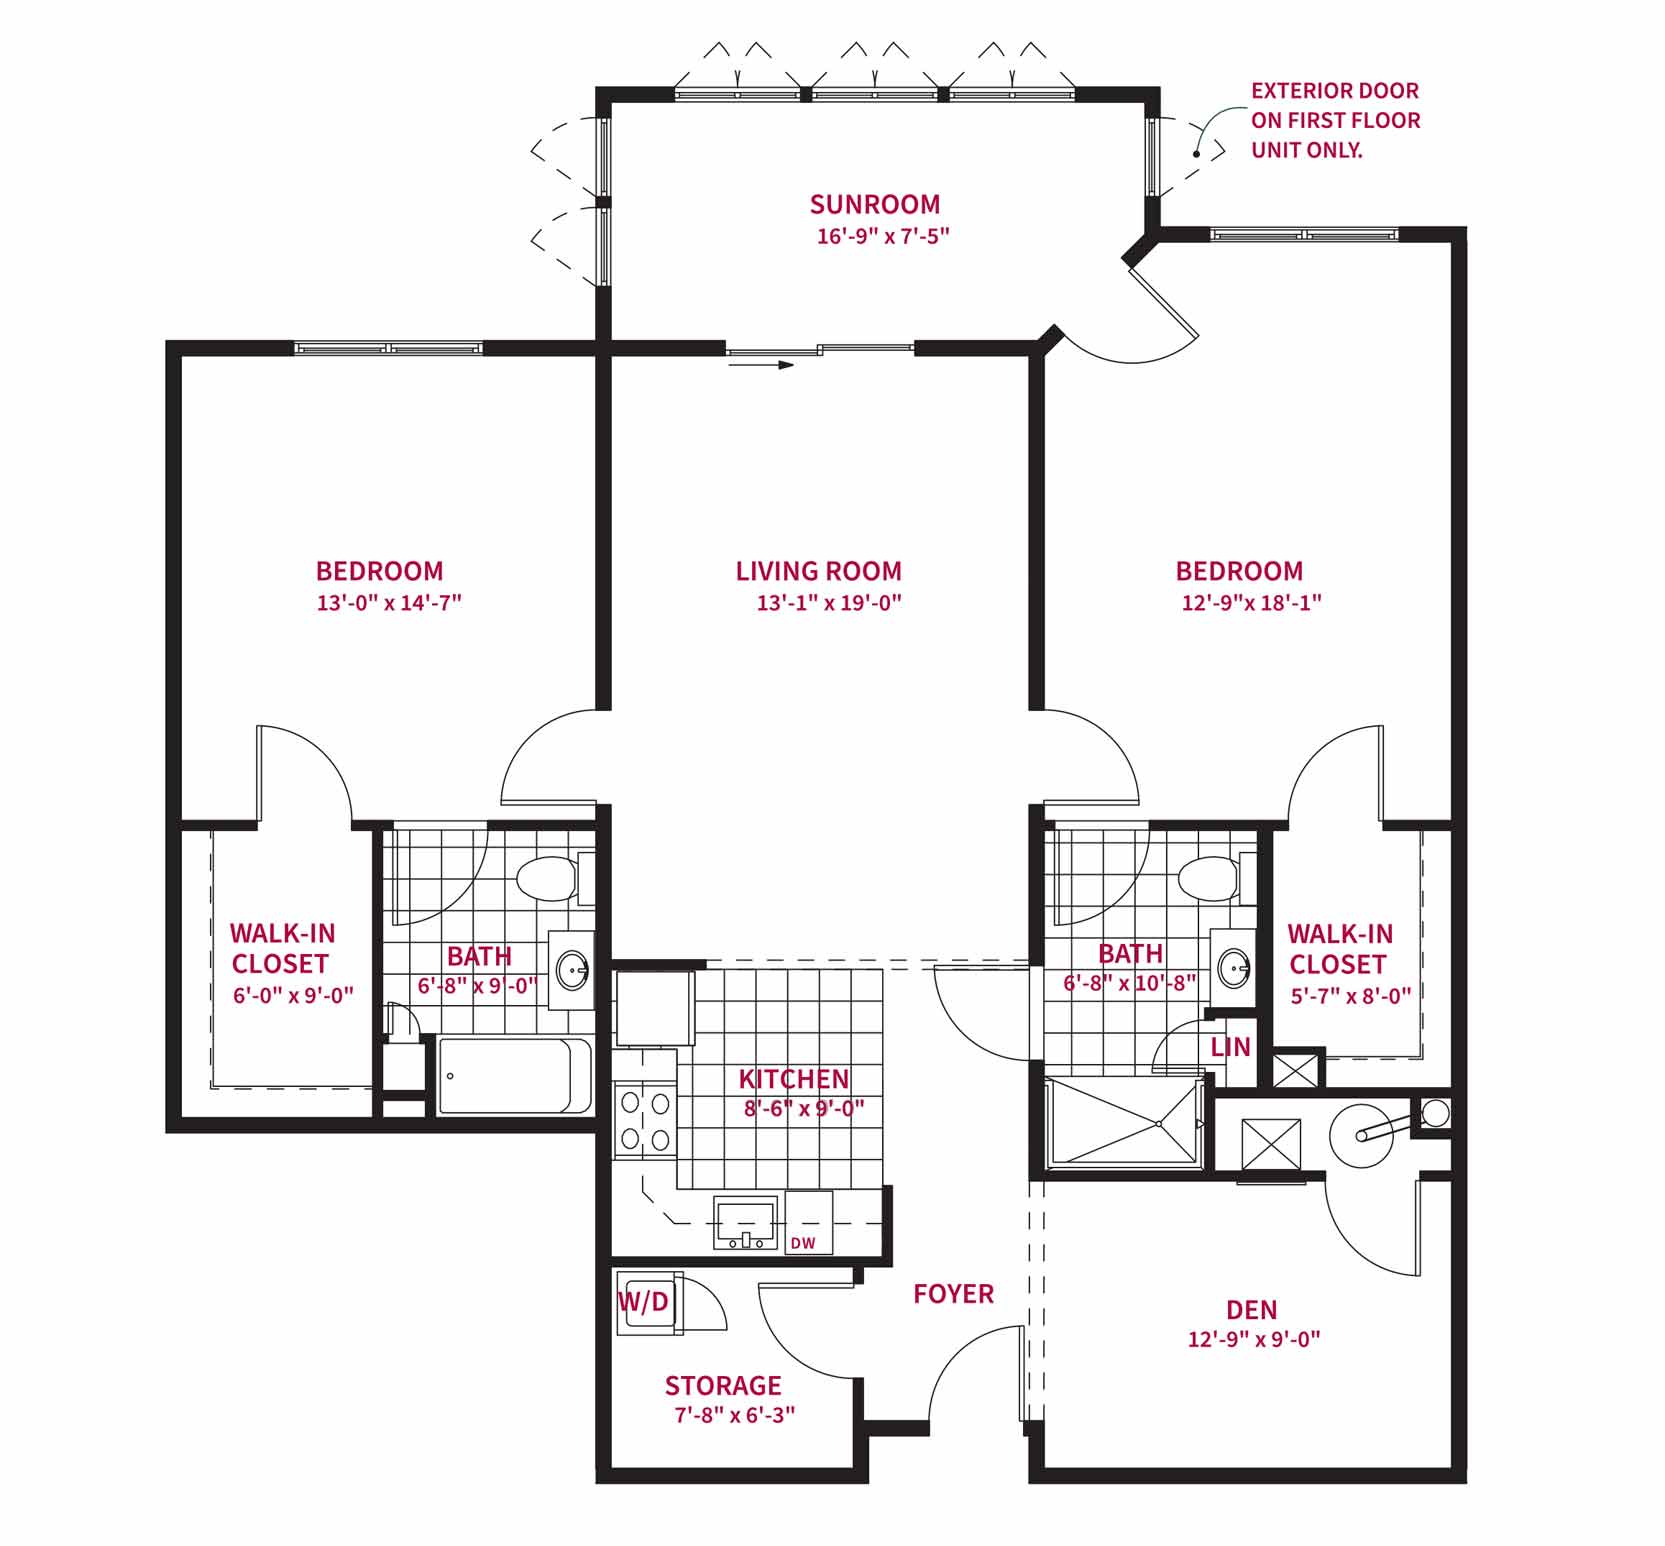 The Conestoga Luxury Senior Apartment floor plan at Jenner’s Pond CCRC